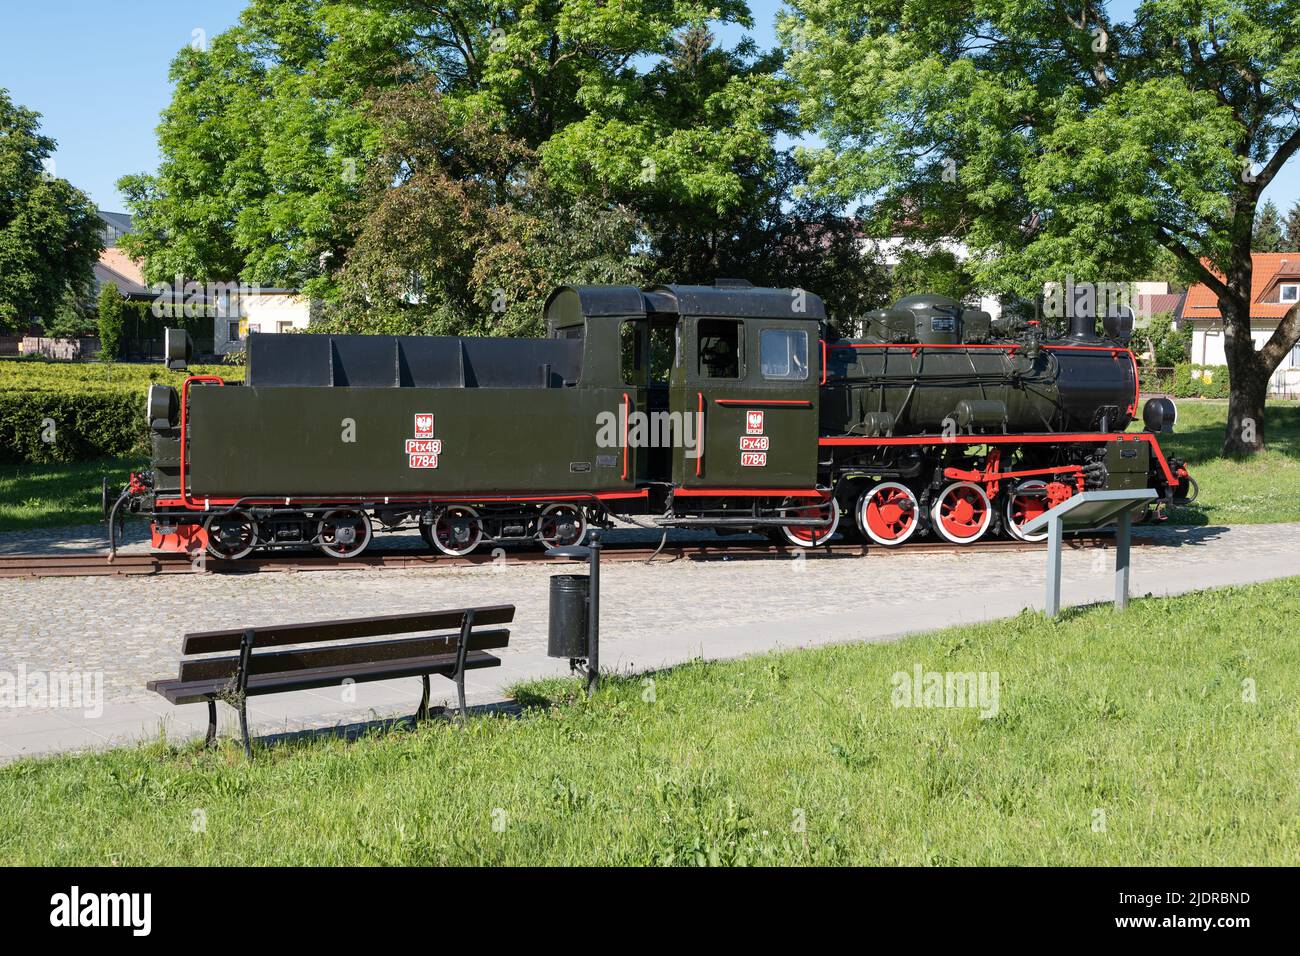 Ciechanów, Poland, Steam locomotive Px48-1784, free access monument in city park. Stock Photo